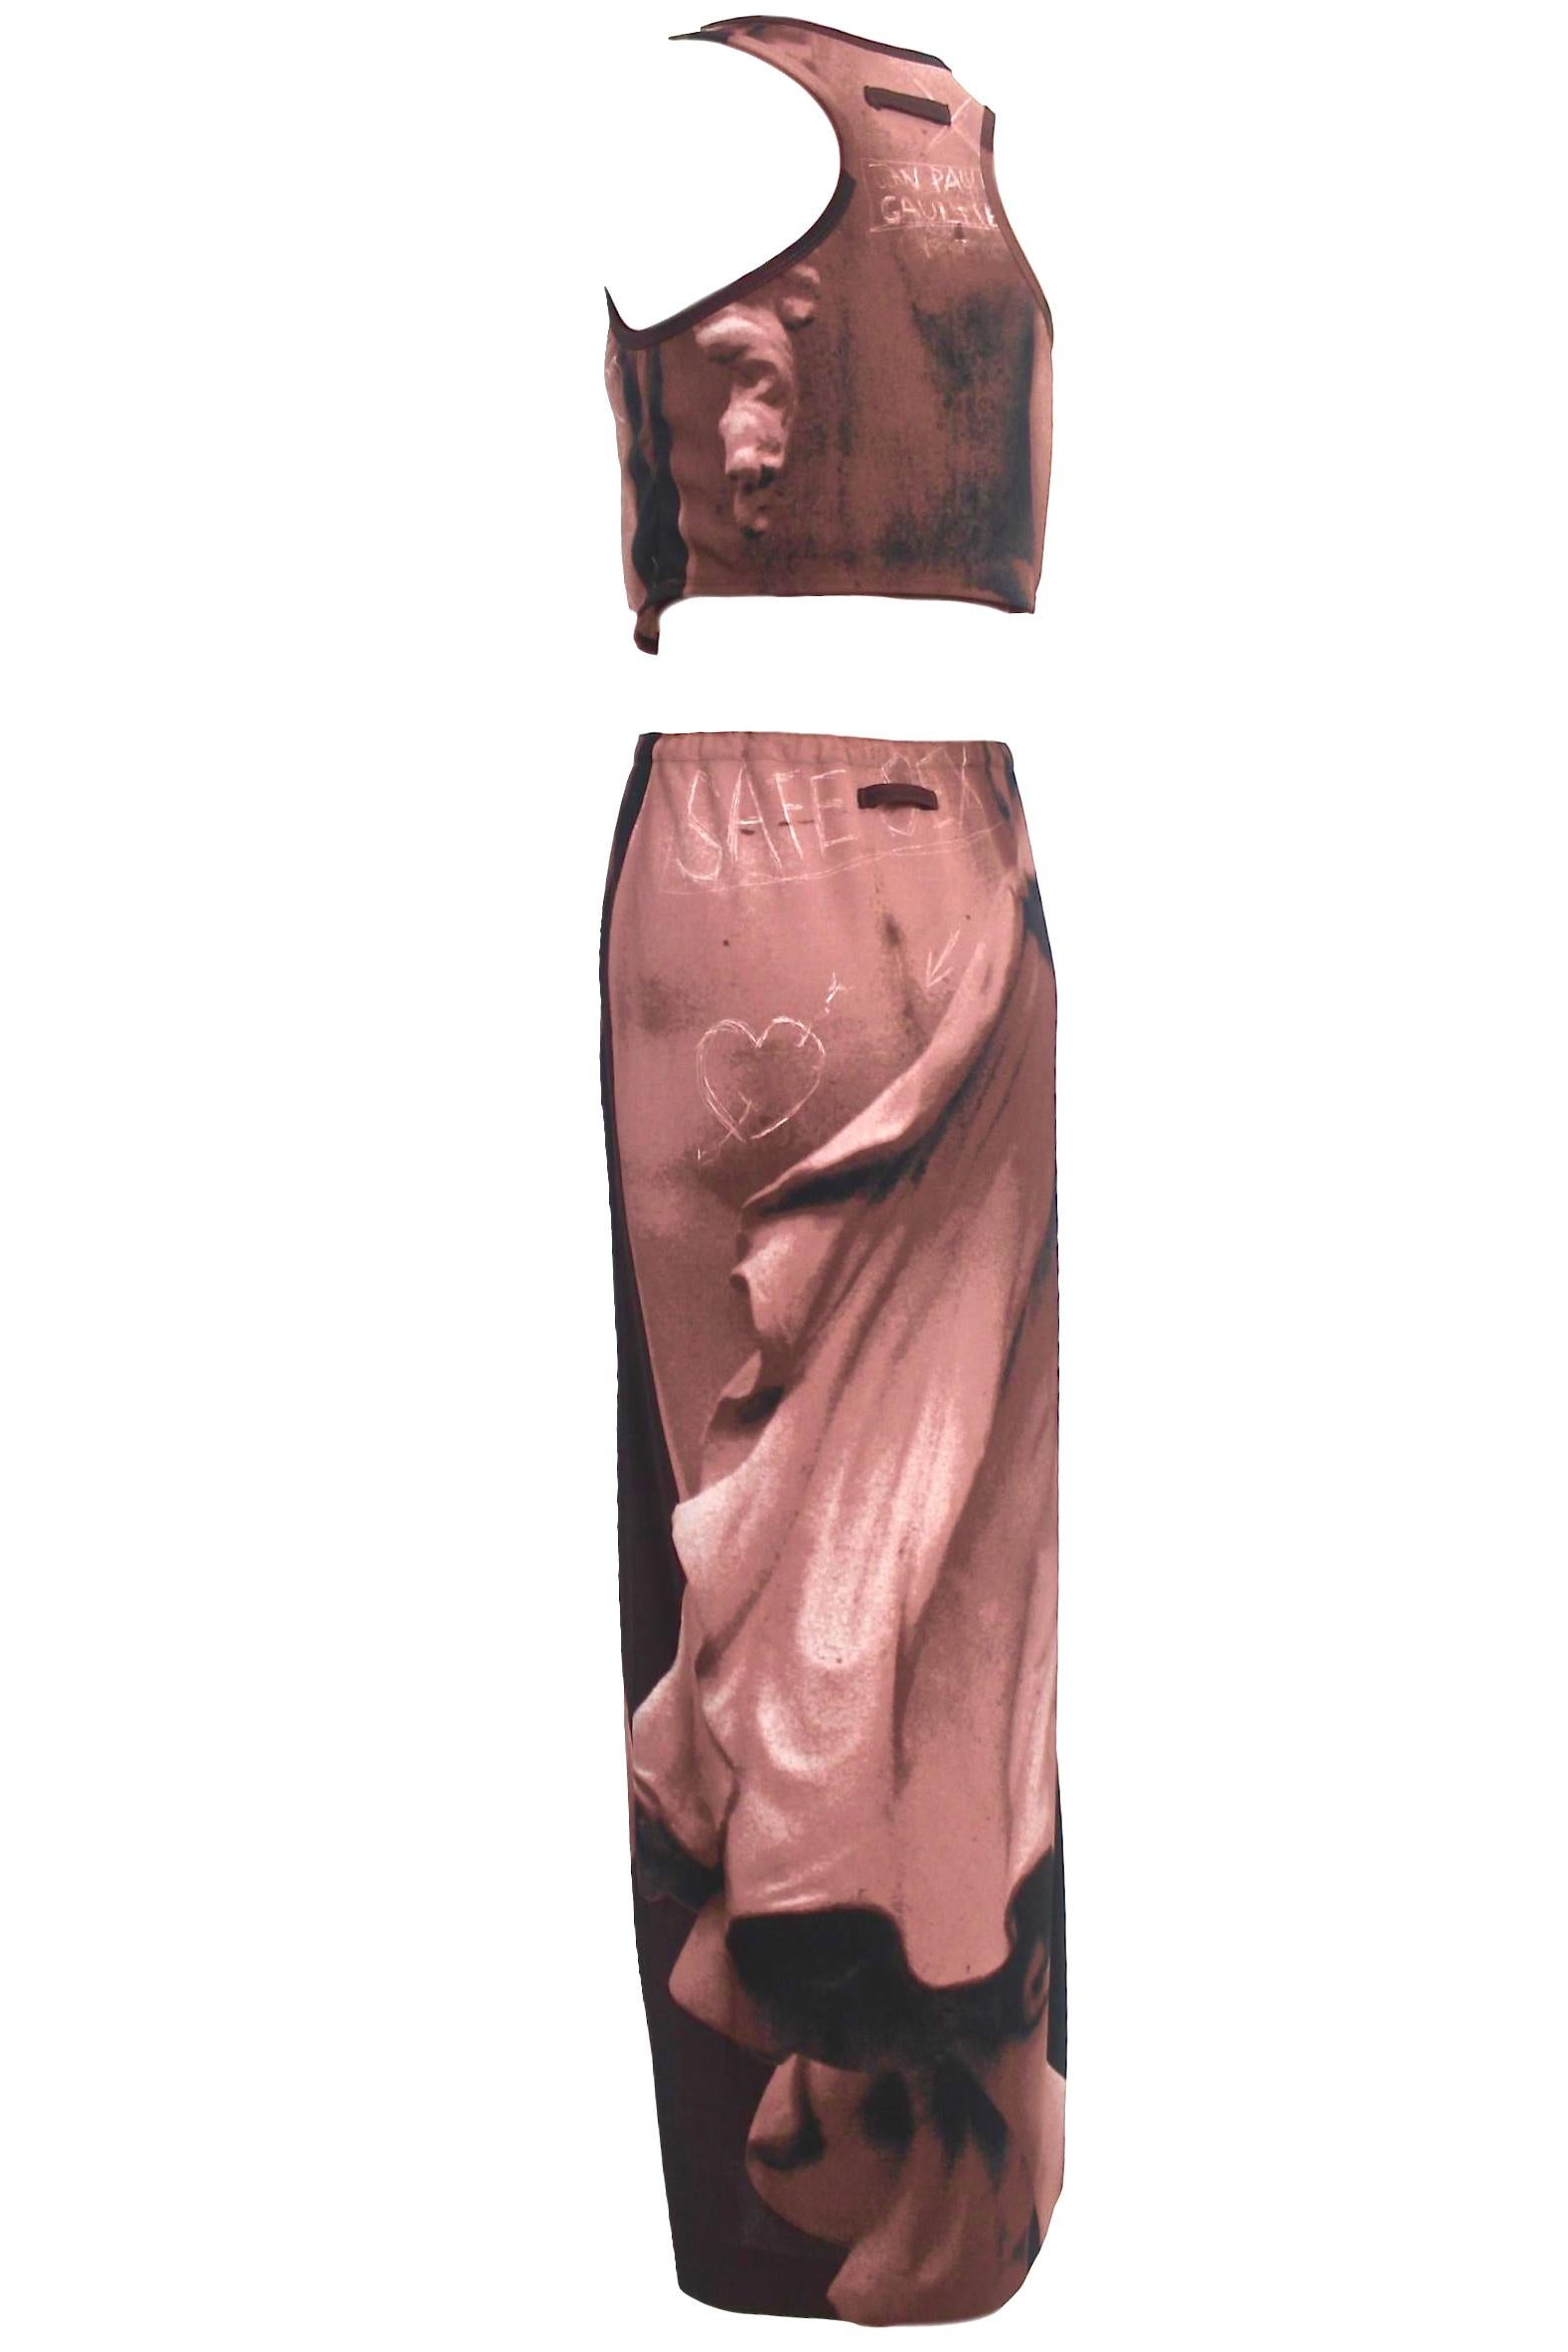 Brown Jean Paul Gaultier 1998/9 Trompe l'oeil Goddess Graffiti Outfit